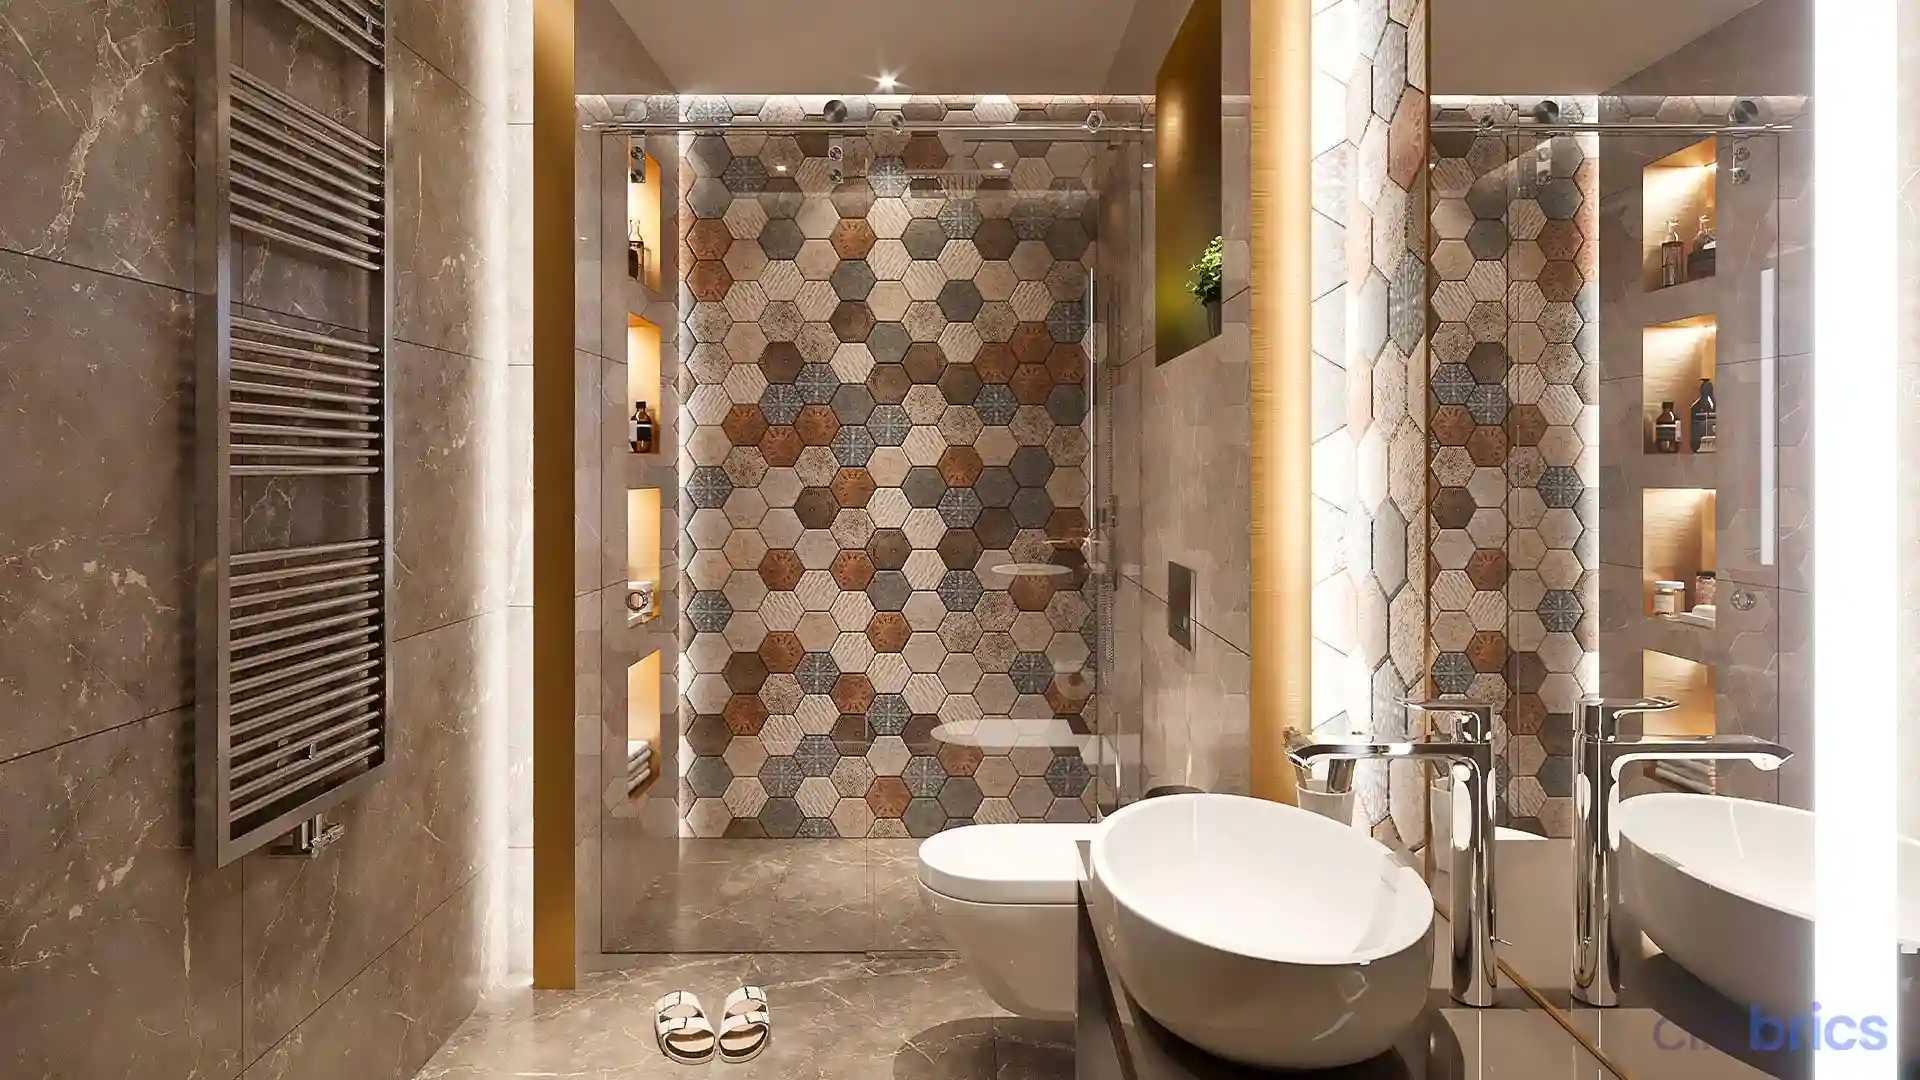 modern bathroom tiling